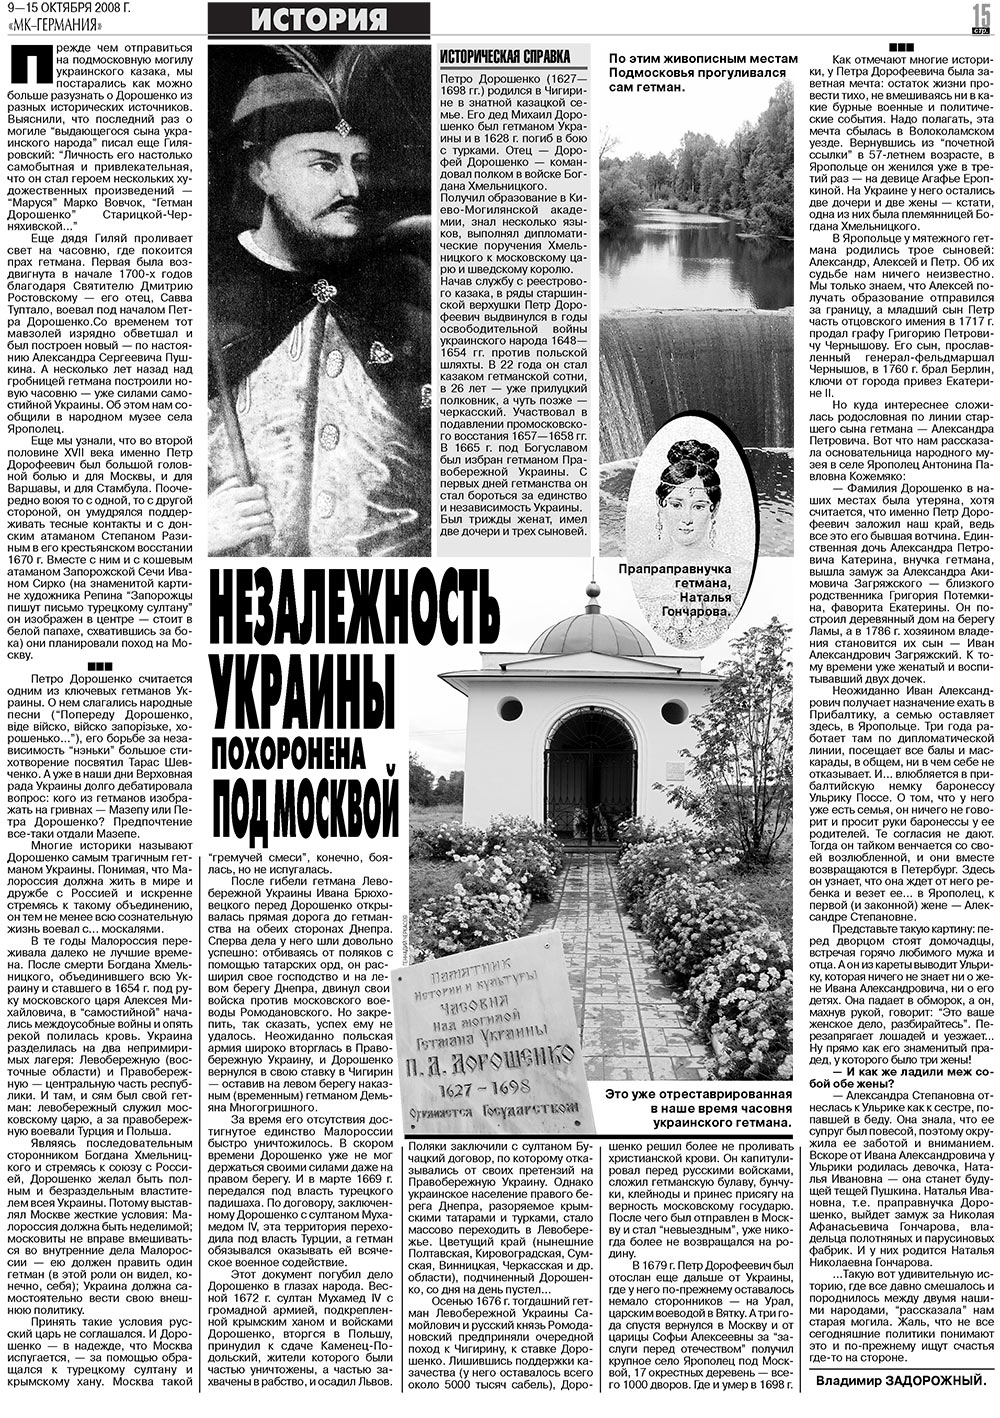 МК-Германия, газета. 2008 №41 стр.15